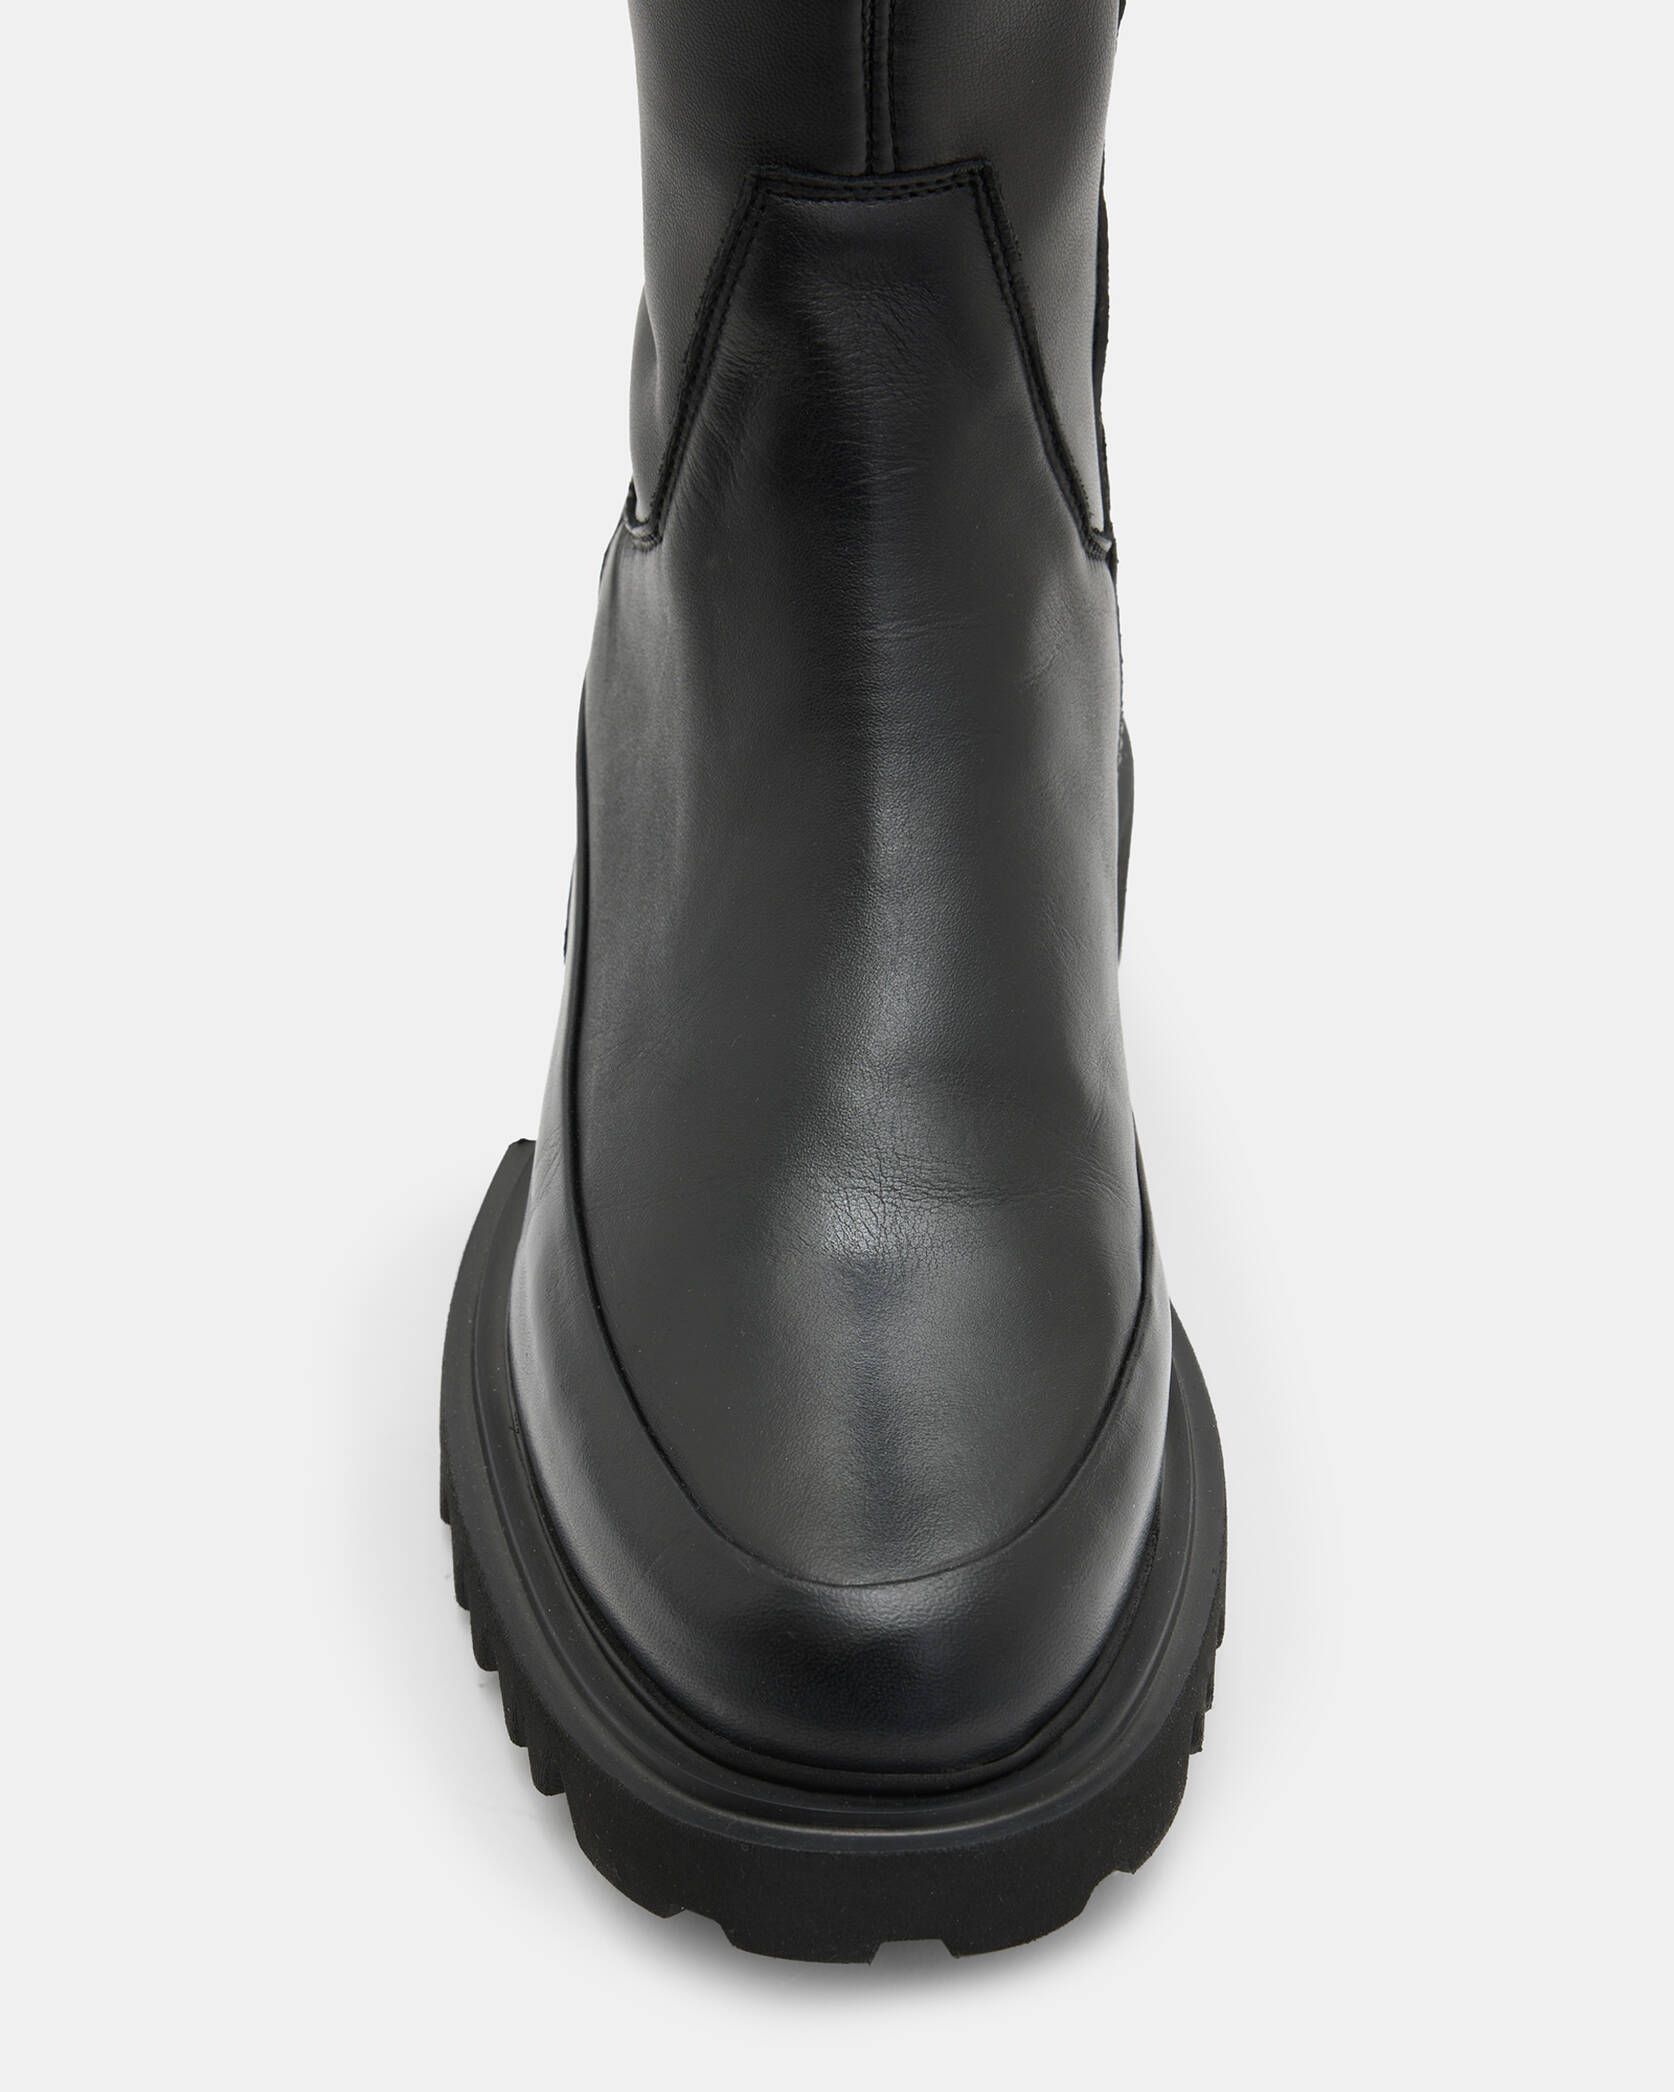 Leona Over The Knee Leather Boots Black | ALLSAINTS | AllSaints UK